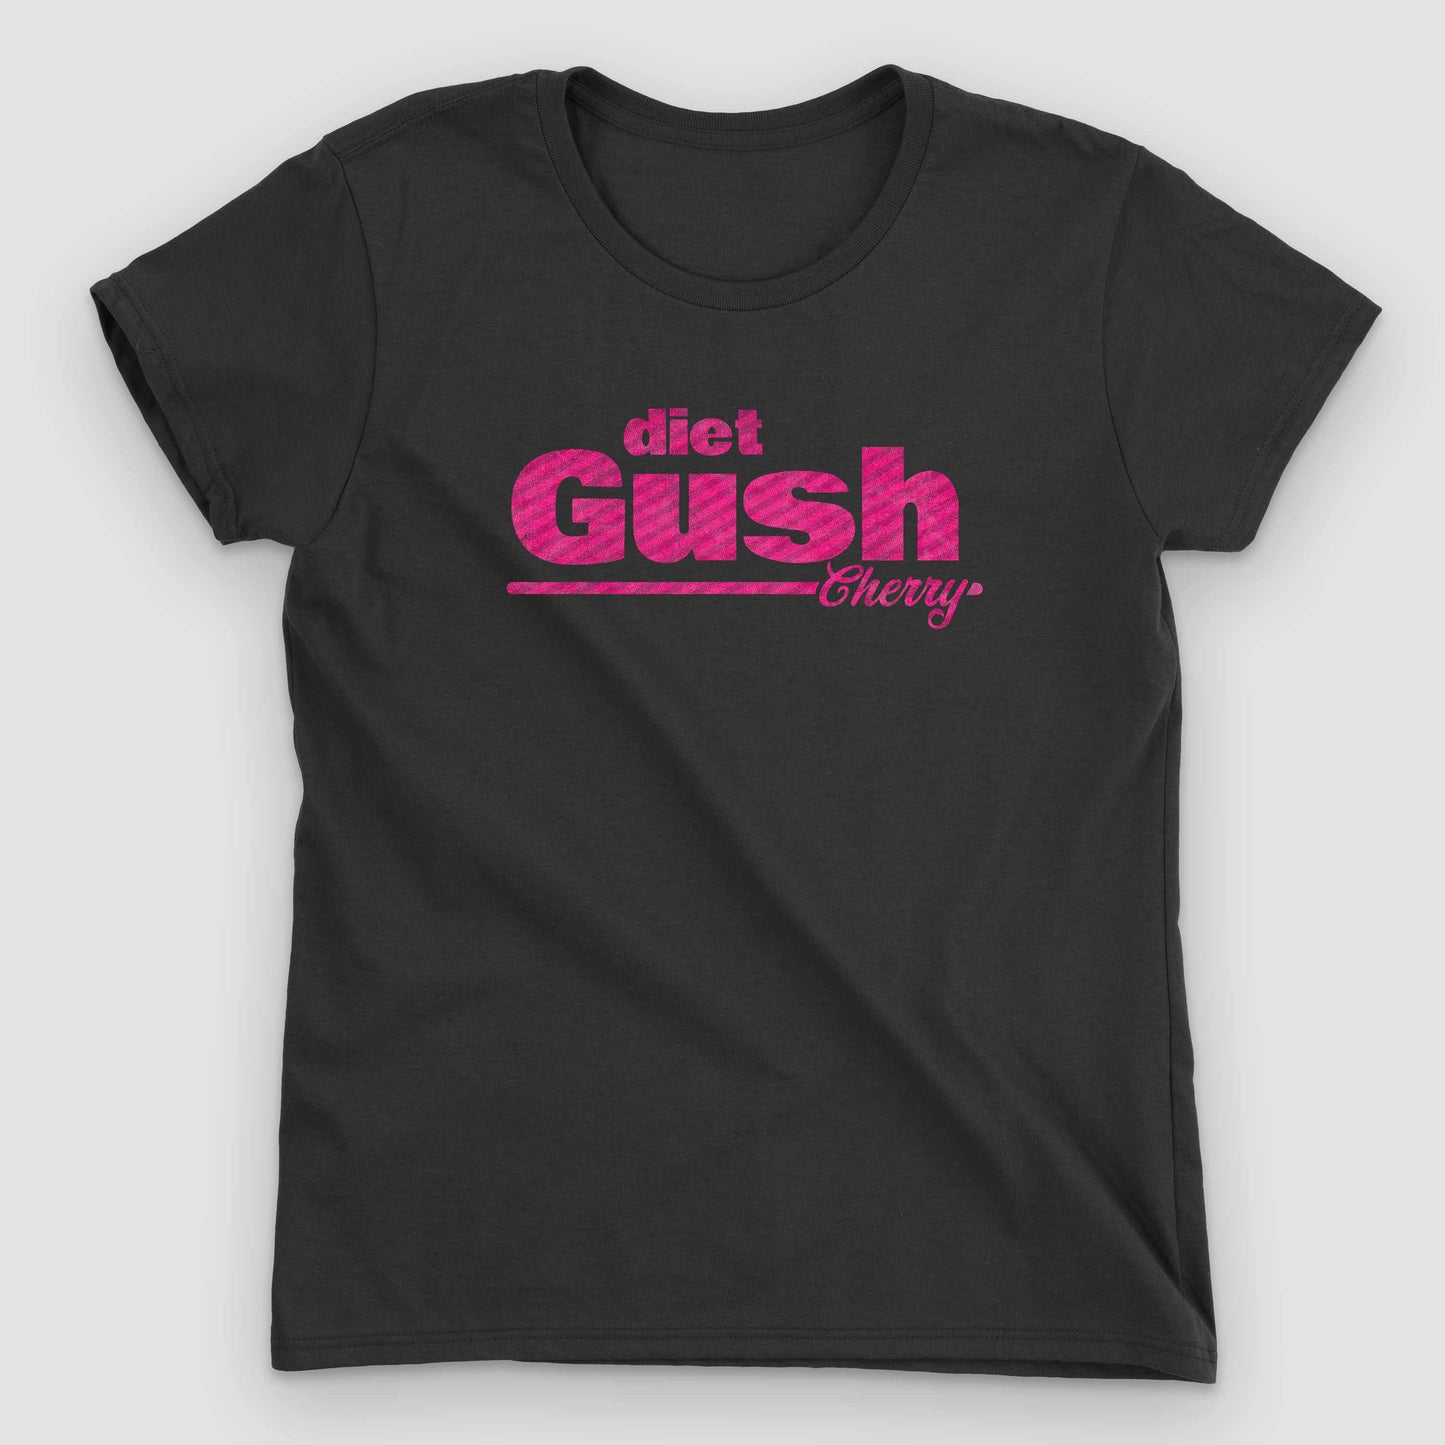 Black Diet Gush Cherry Soda Women's Graphic T-Shirt by Snaxtime